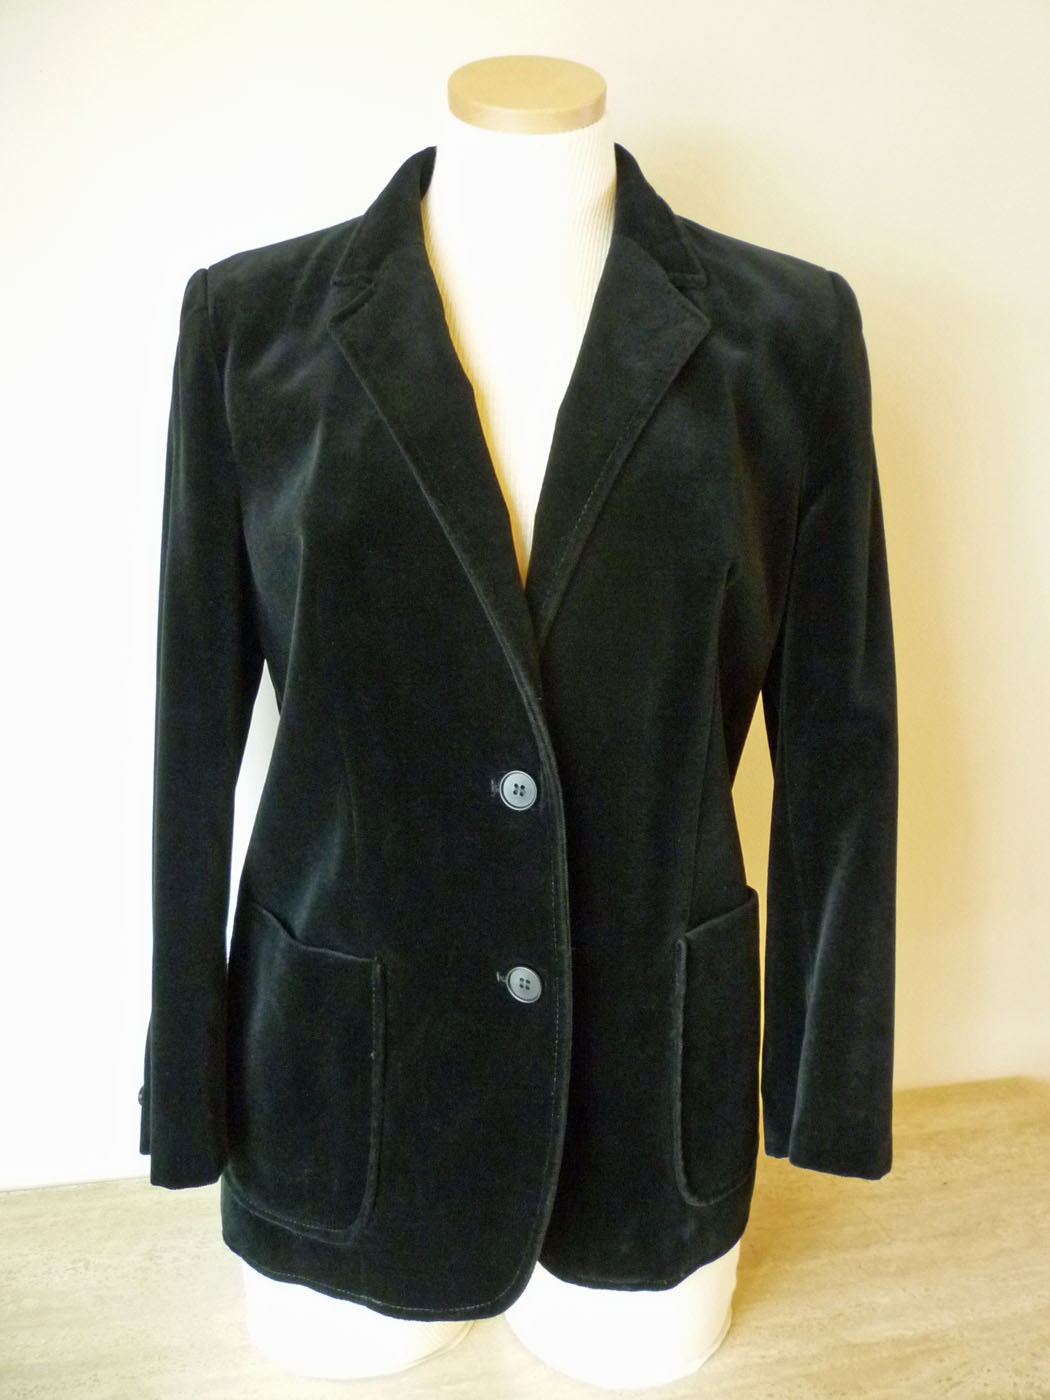 Black Velour Blazer Jacket for Women Made in Belgium Size